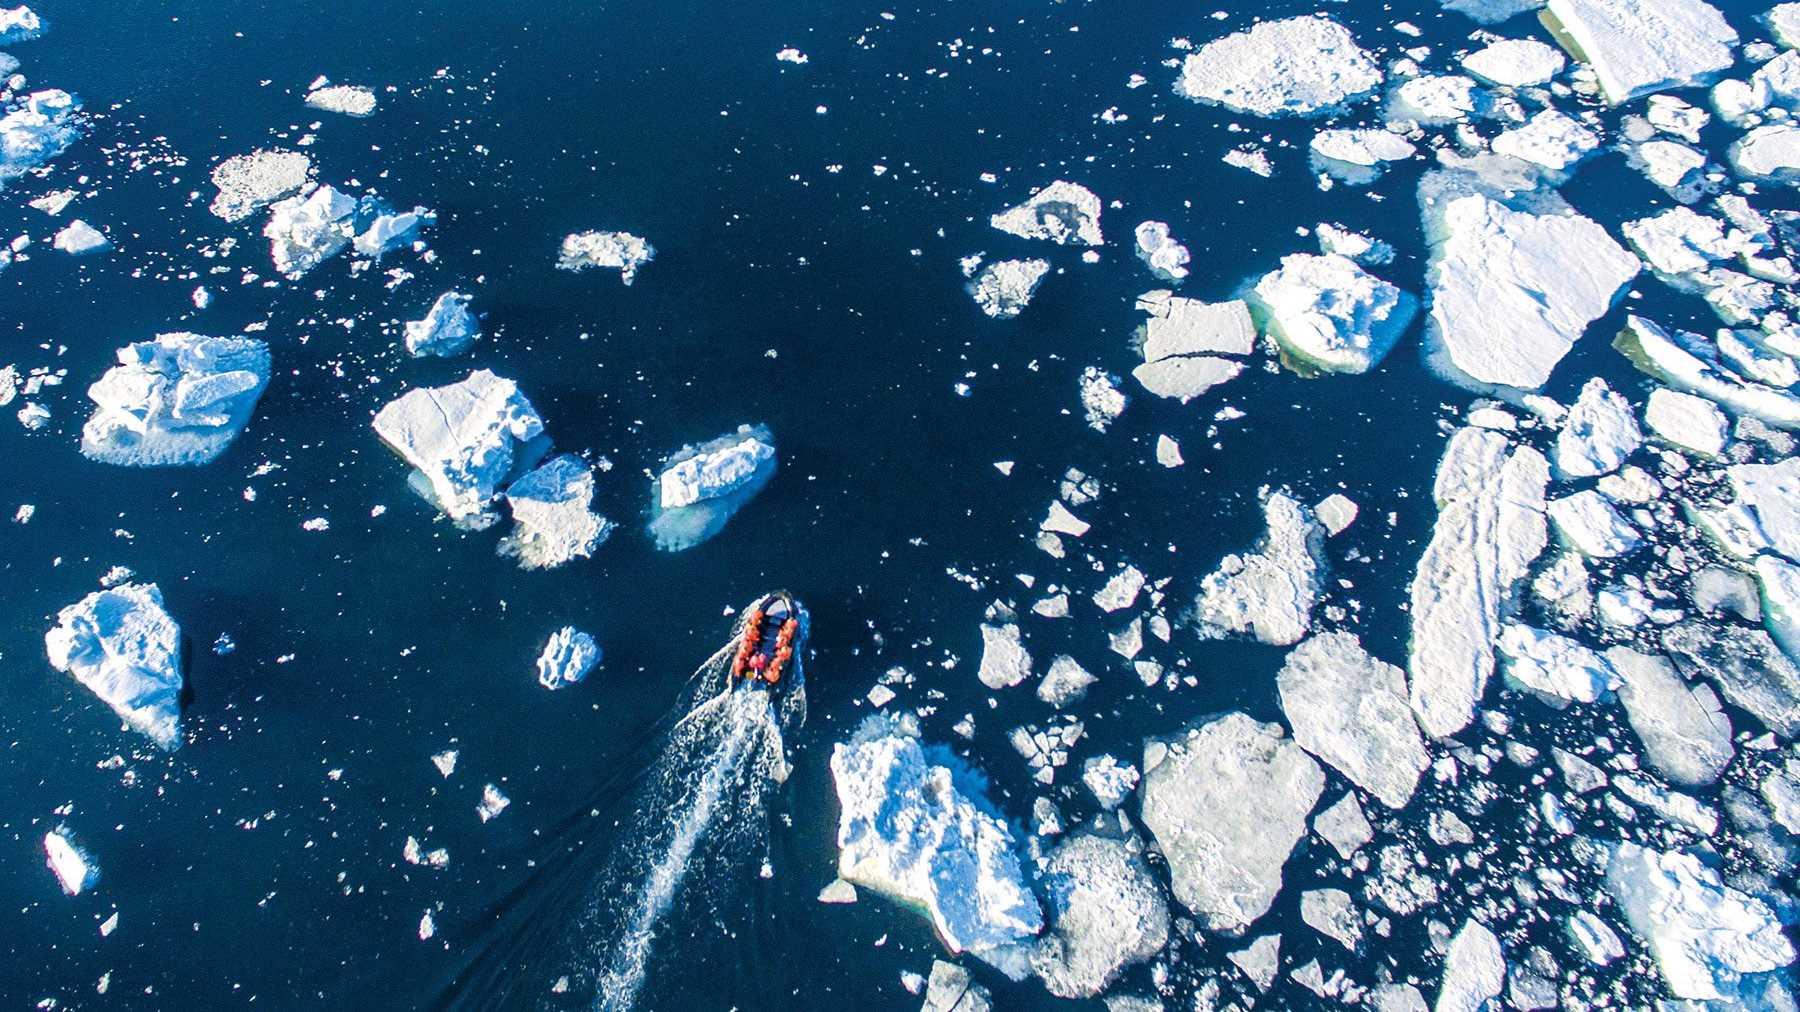 A Zodiac cruises through sea ice in the Southern Ocean